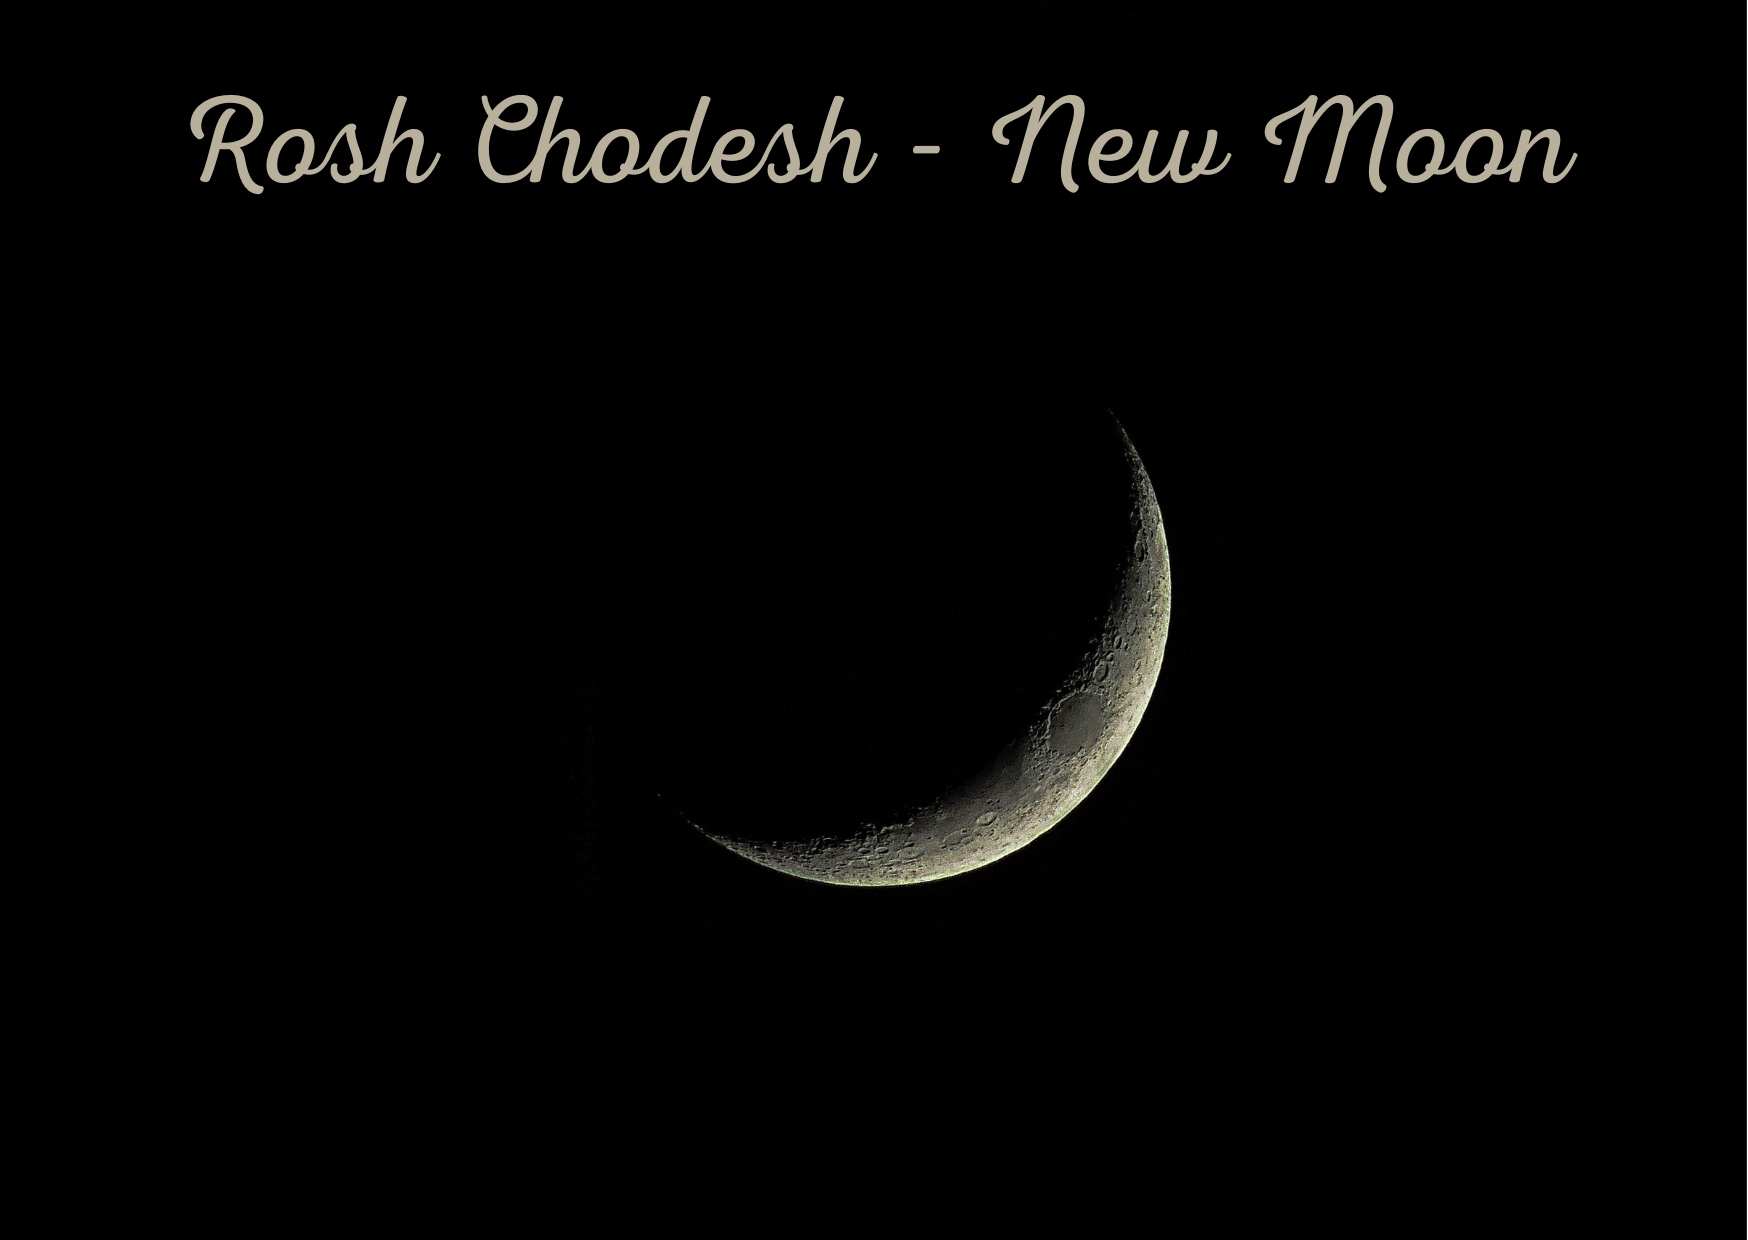 New Moon Rosh Chodesh